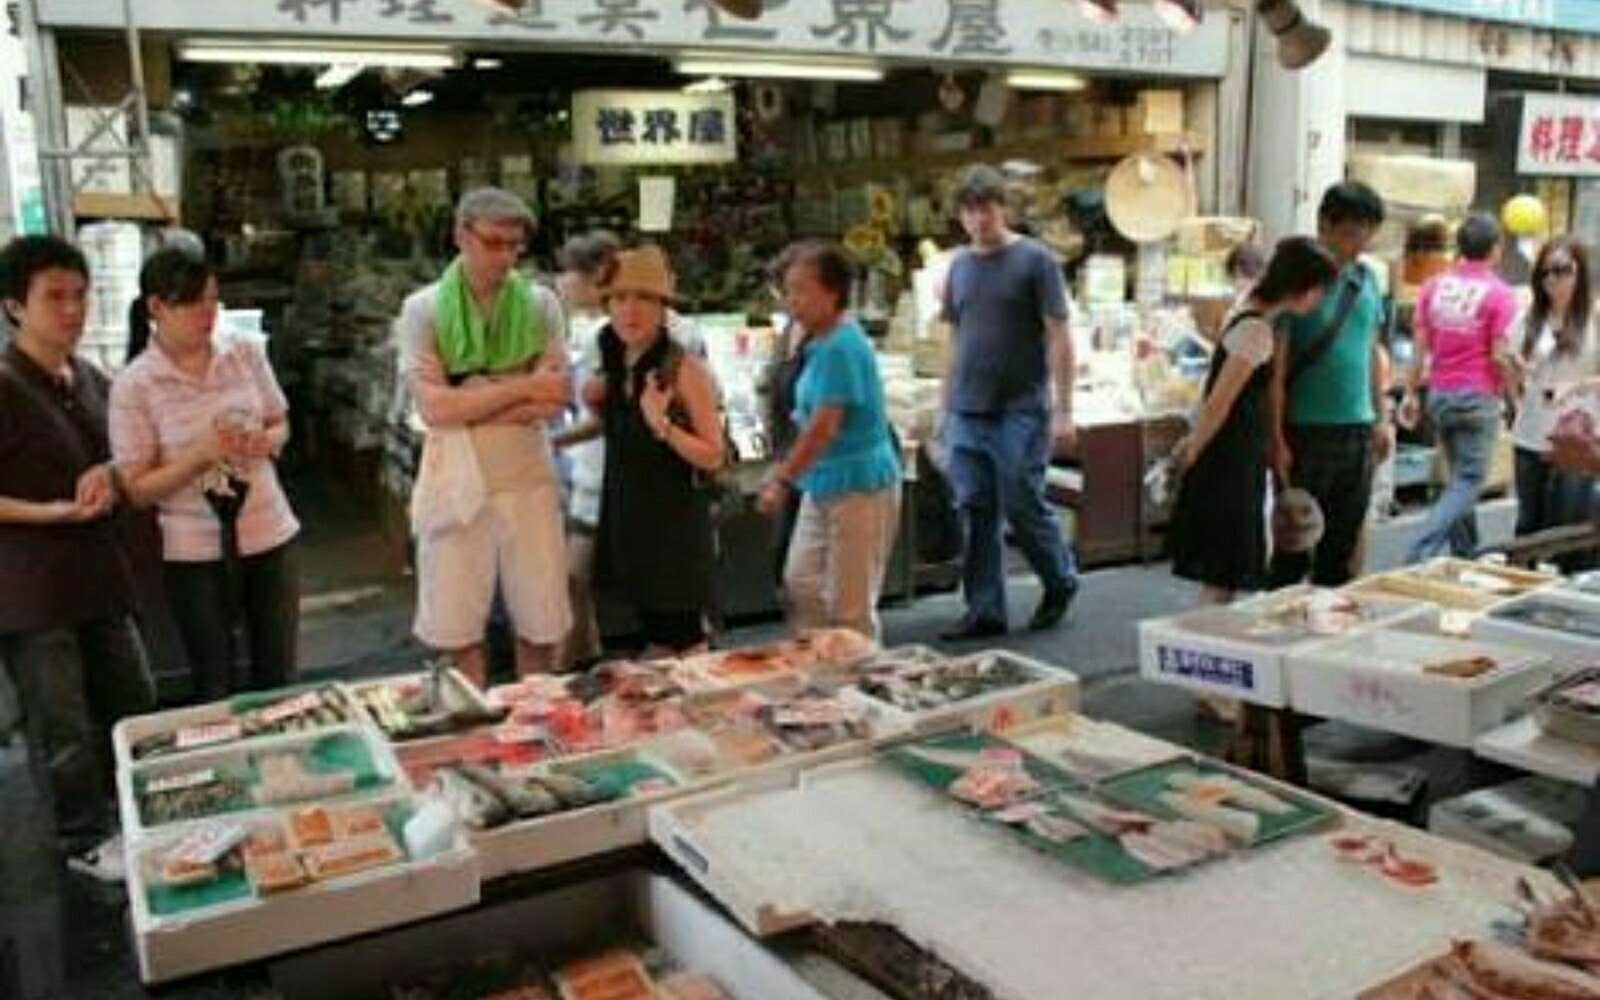 Tsukiji outer market